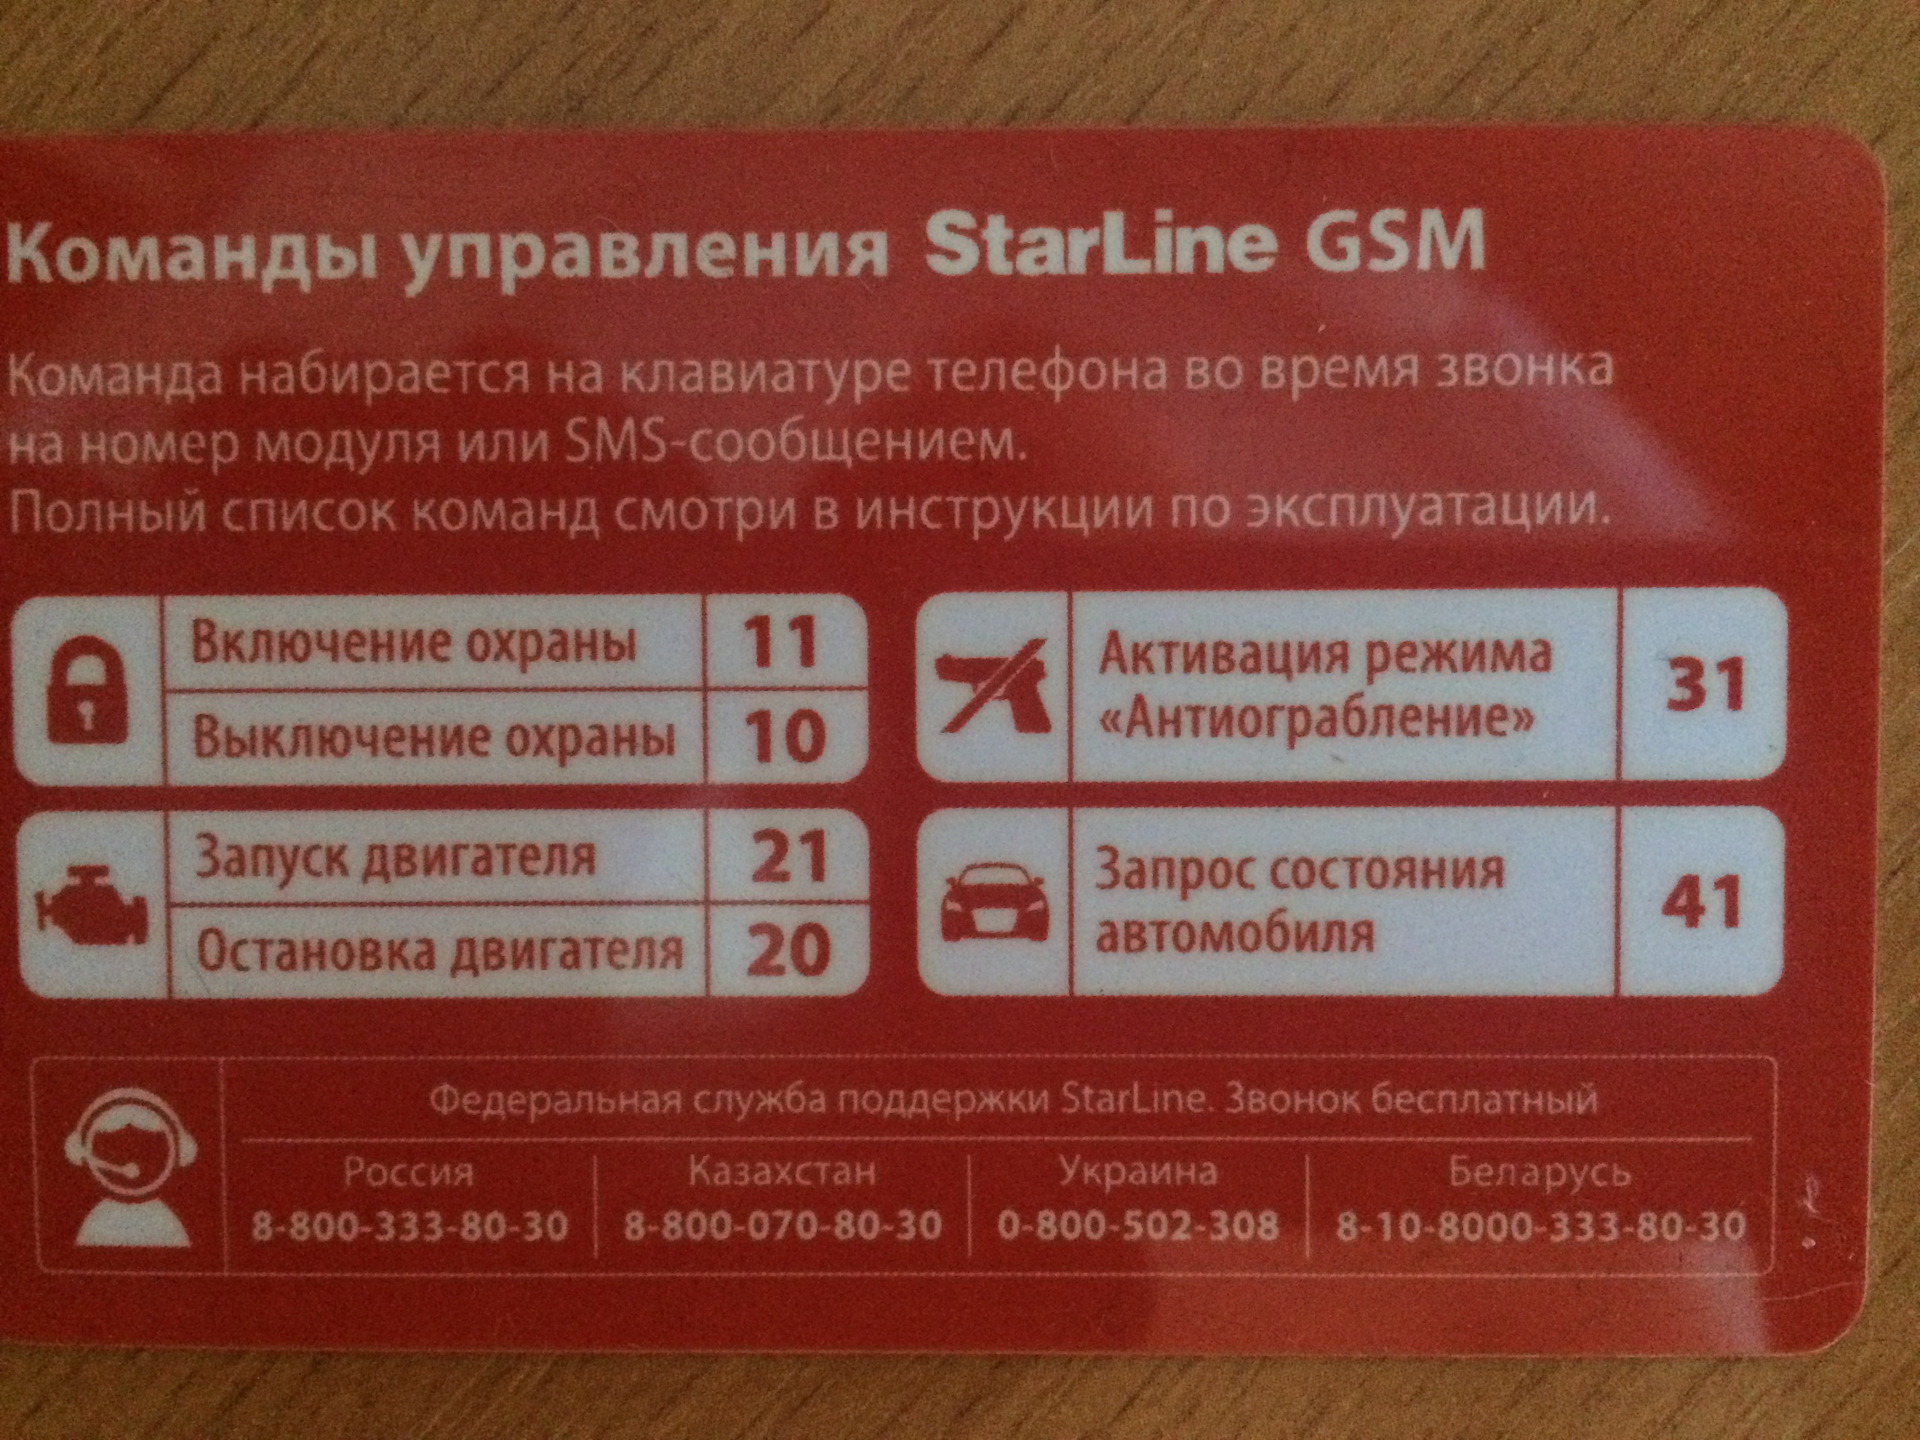 Команда запуска старлайн. Команды управления STARLINE GSM. Коды команд старлайн GSM а93. Коды сигнализации STARLINE GSM. SMS команды STARLINE s96.